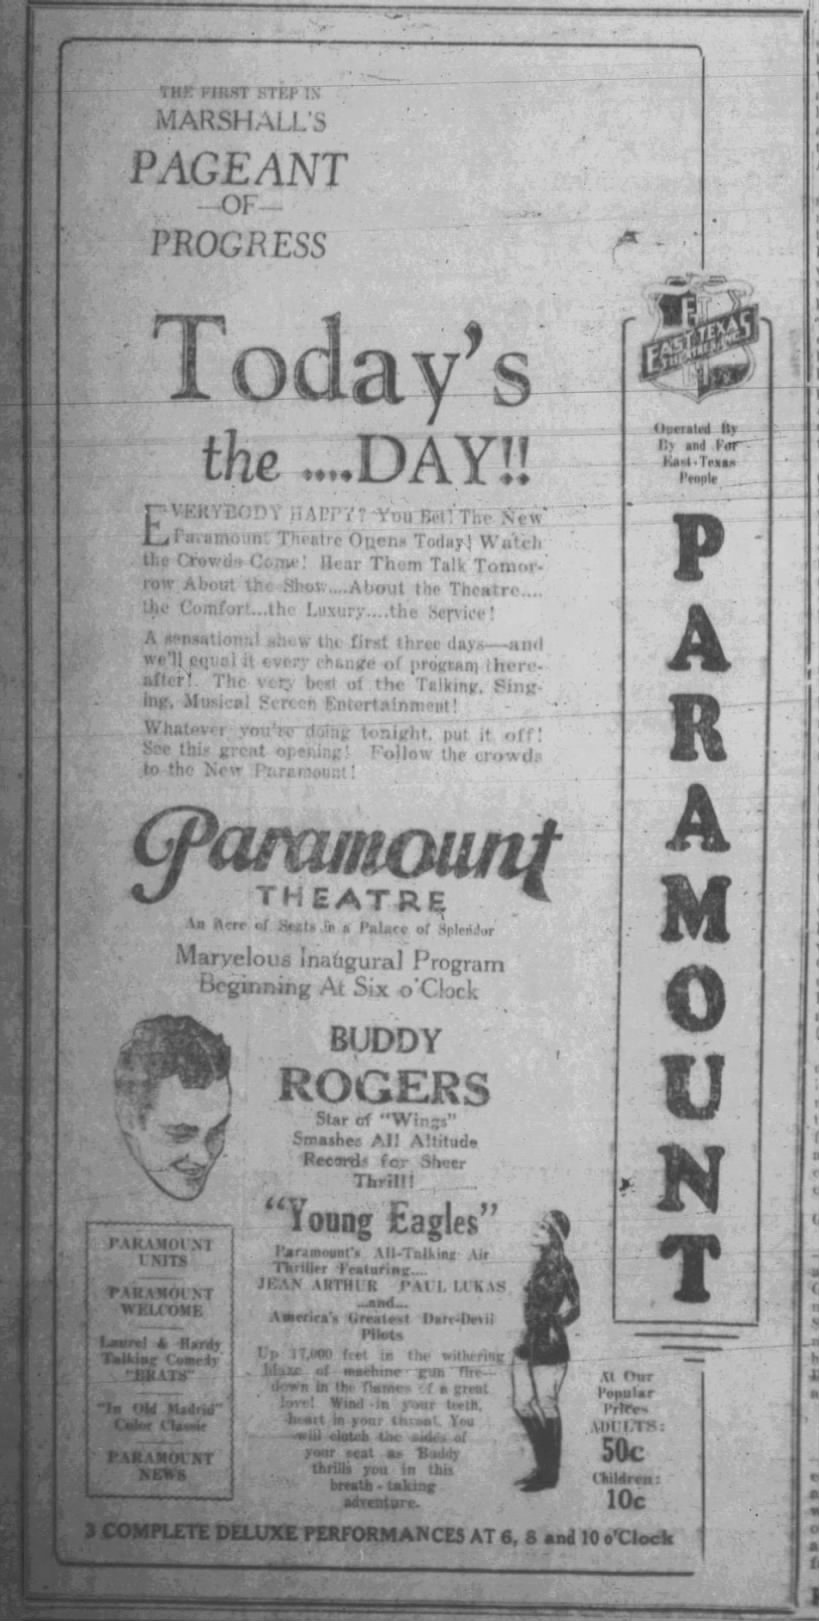 Paramount theatre opening